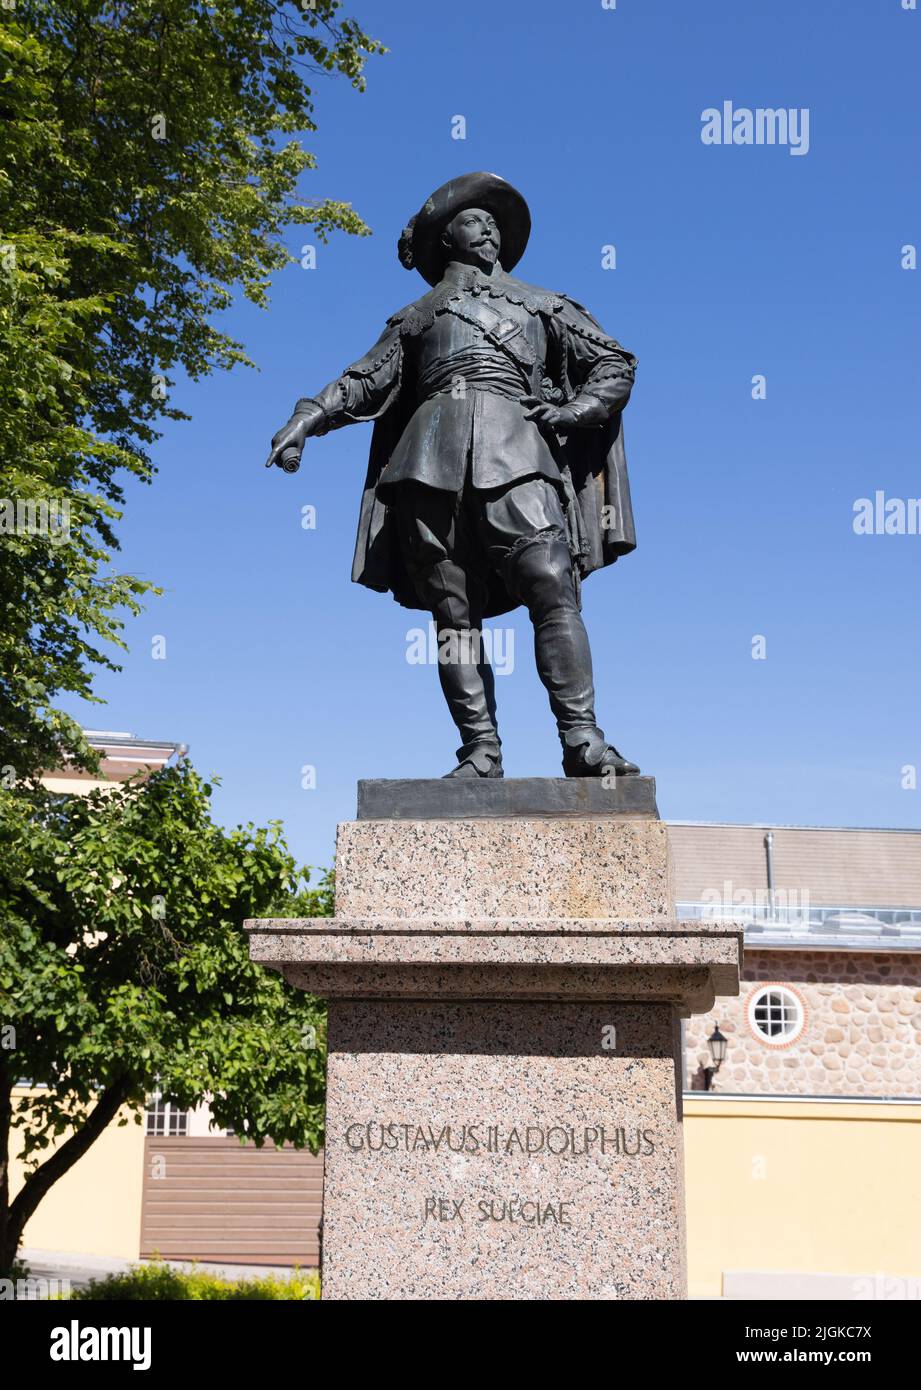 Statue of Gustavus Adolphus, King of Sweden in the 1600s, Tartu, Estonia, Europe Stock Photo